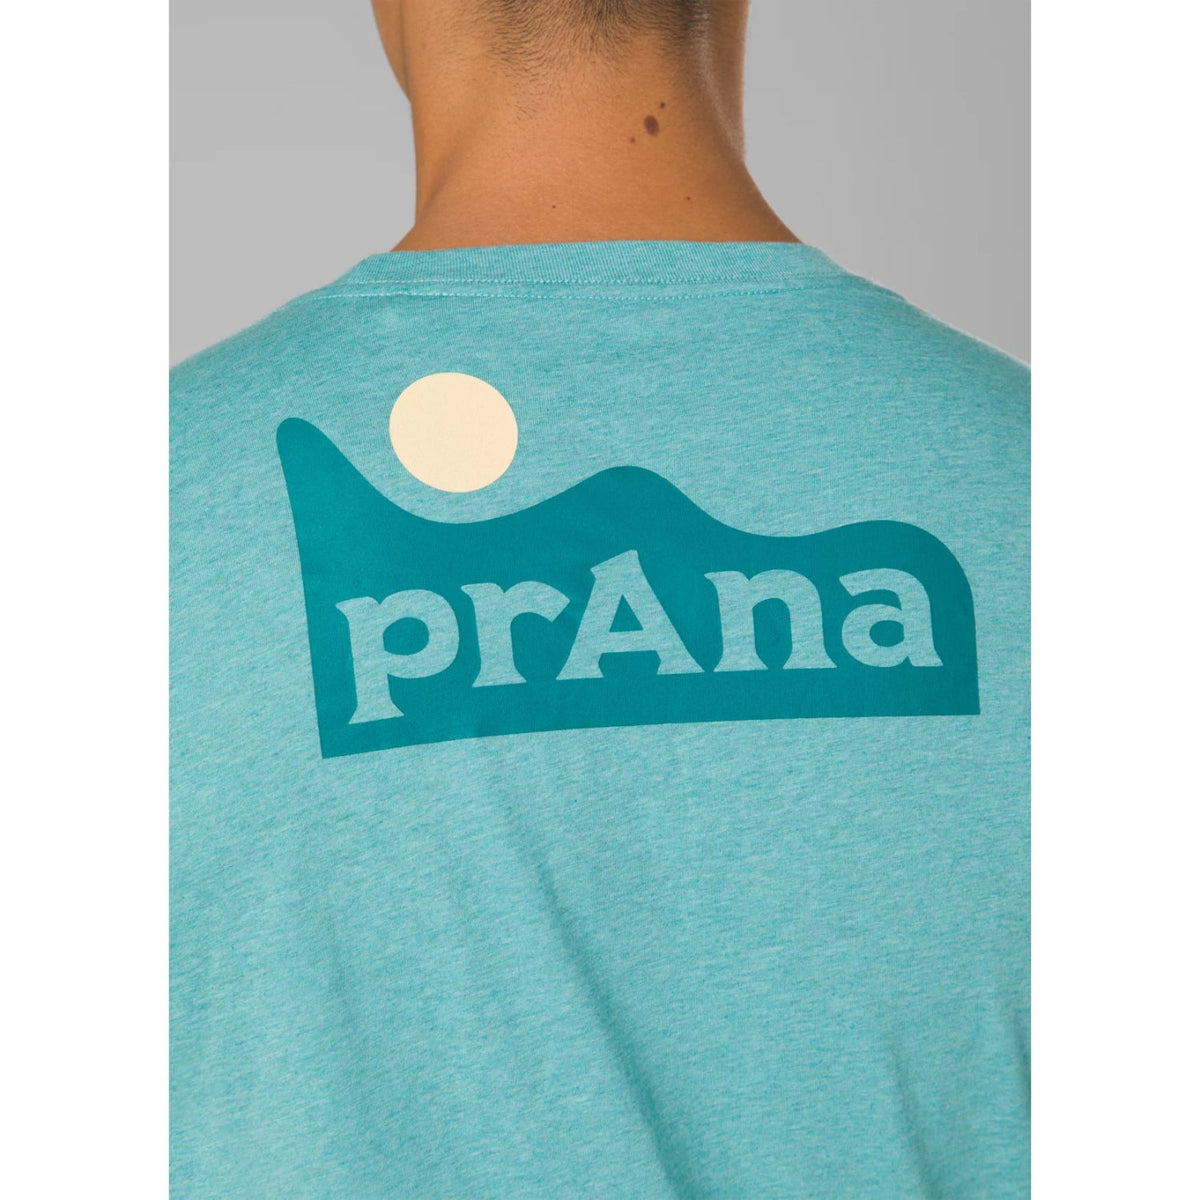 Prana Graphic Short Sleeve T-Shirt in aqua heather colour